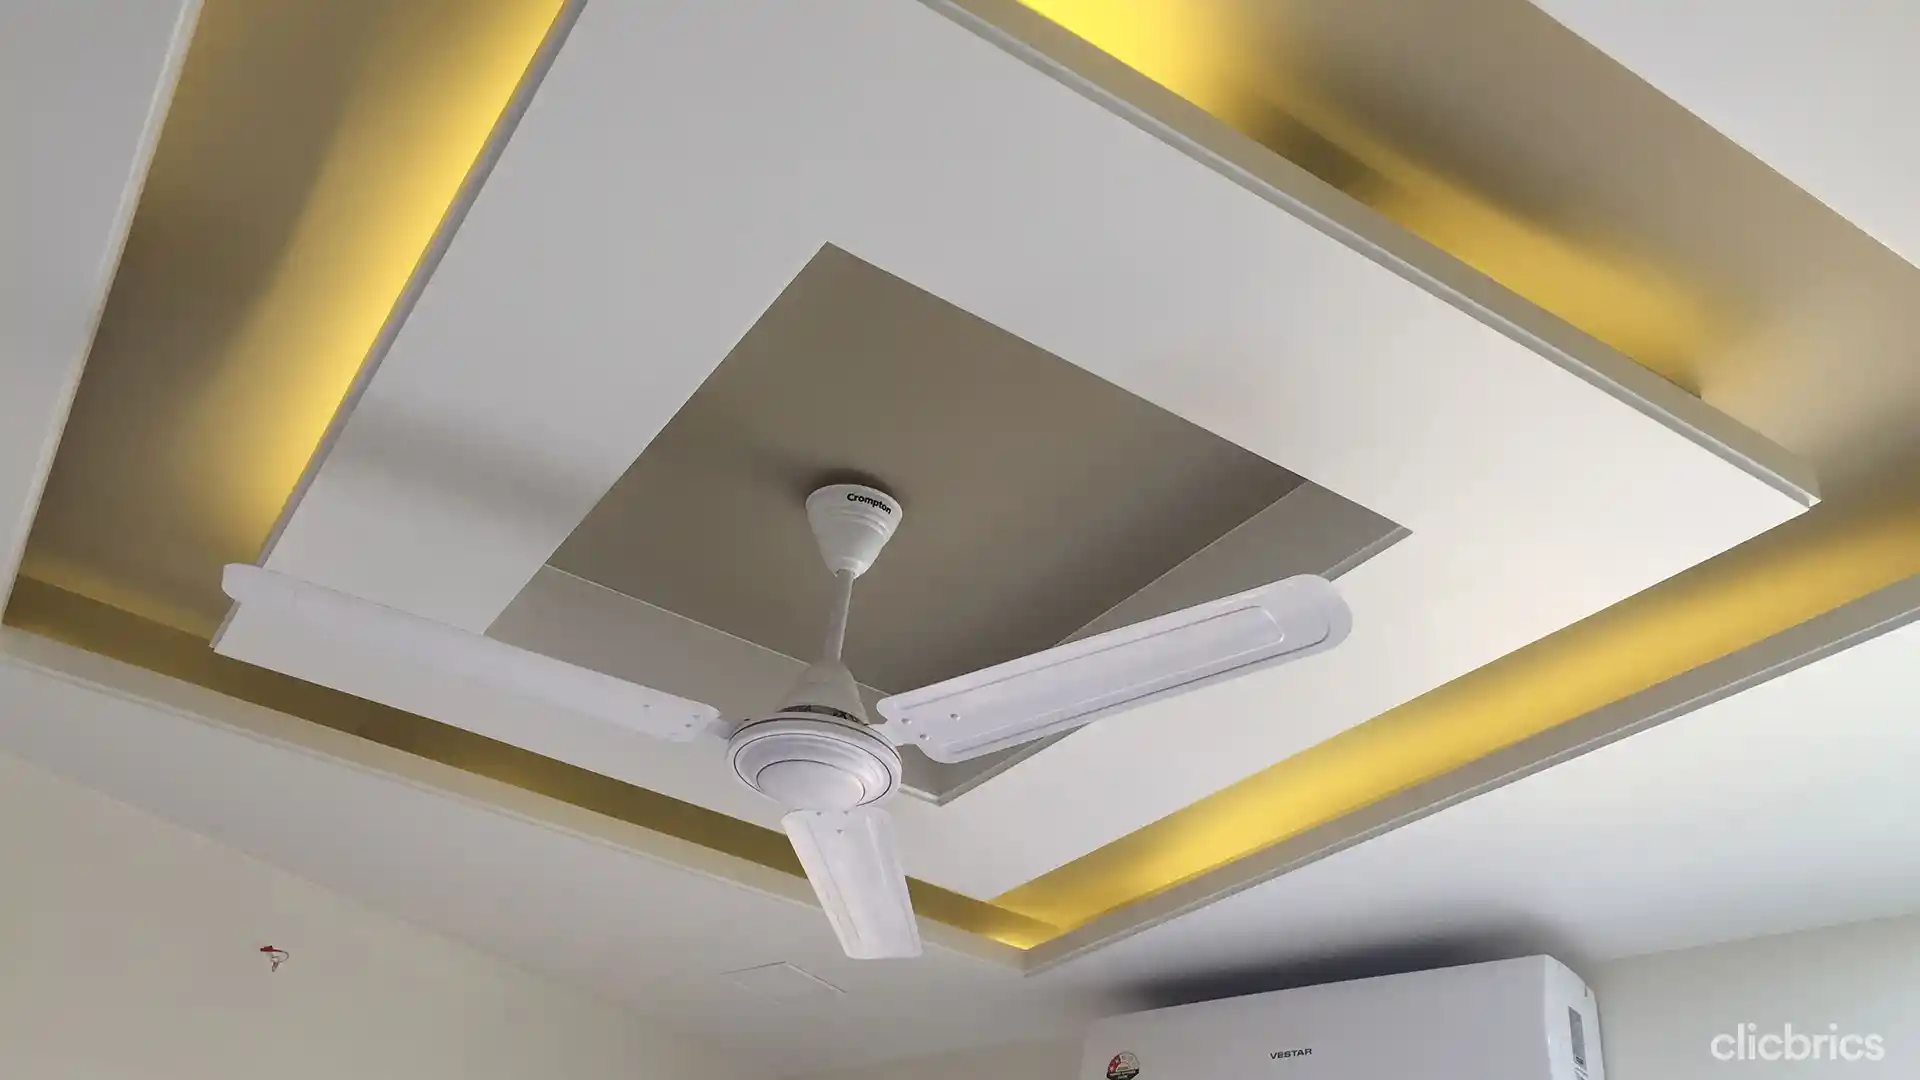 false ceiling design for bedroom with fan